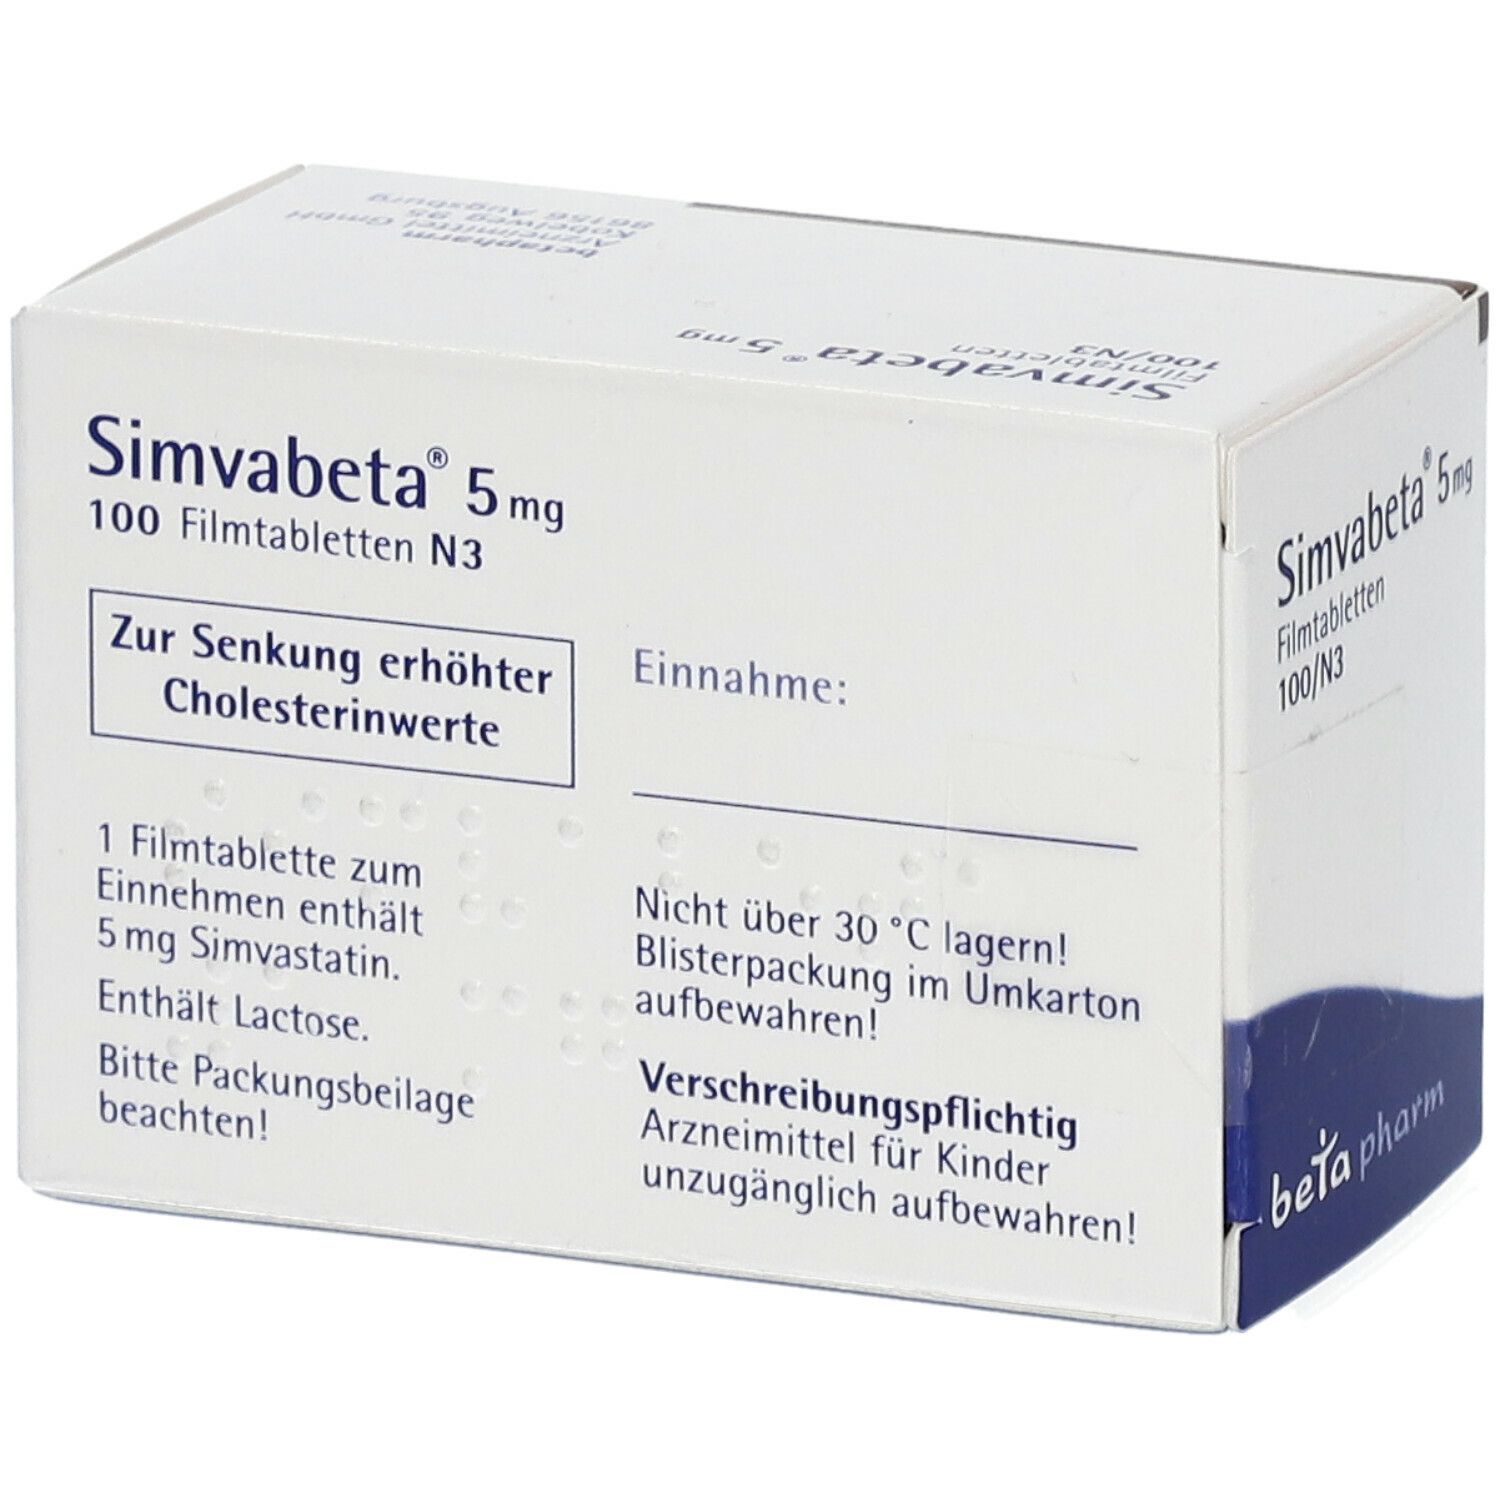 Simvabeta® 5 mg